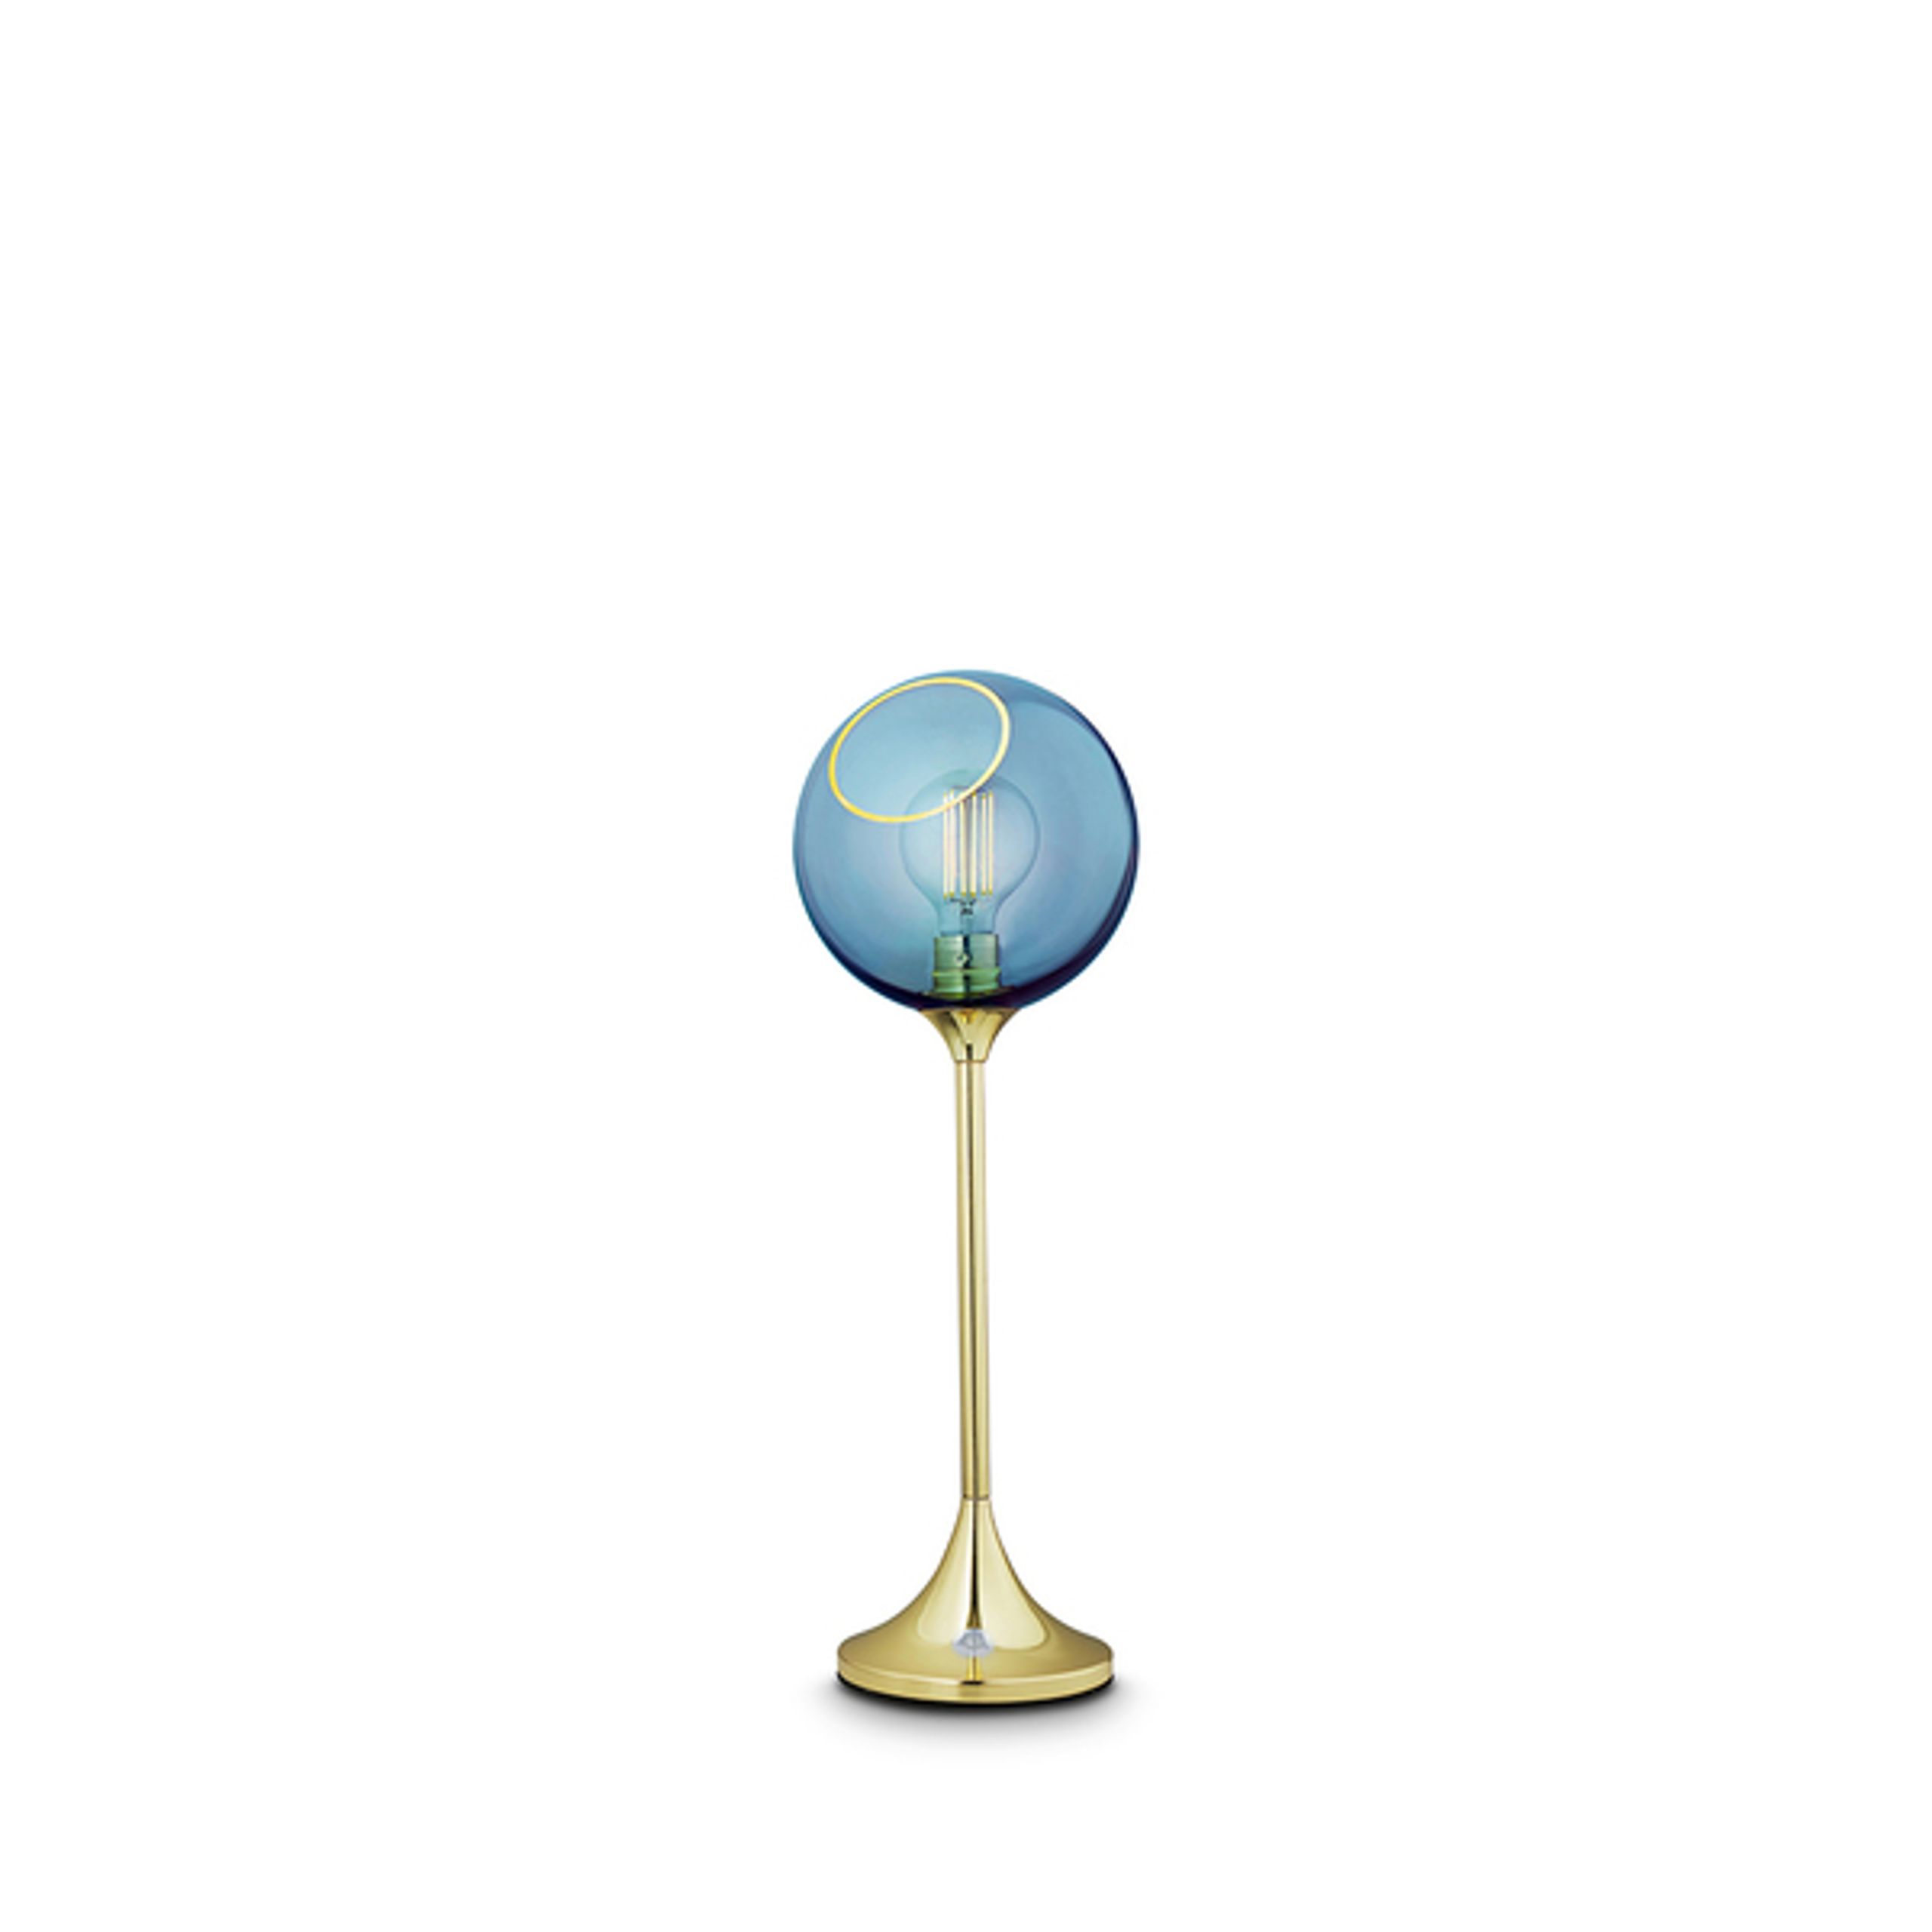 Design By Us - Tischlampe - Ballroom Table Lamp - Blue/Gold